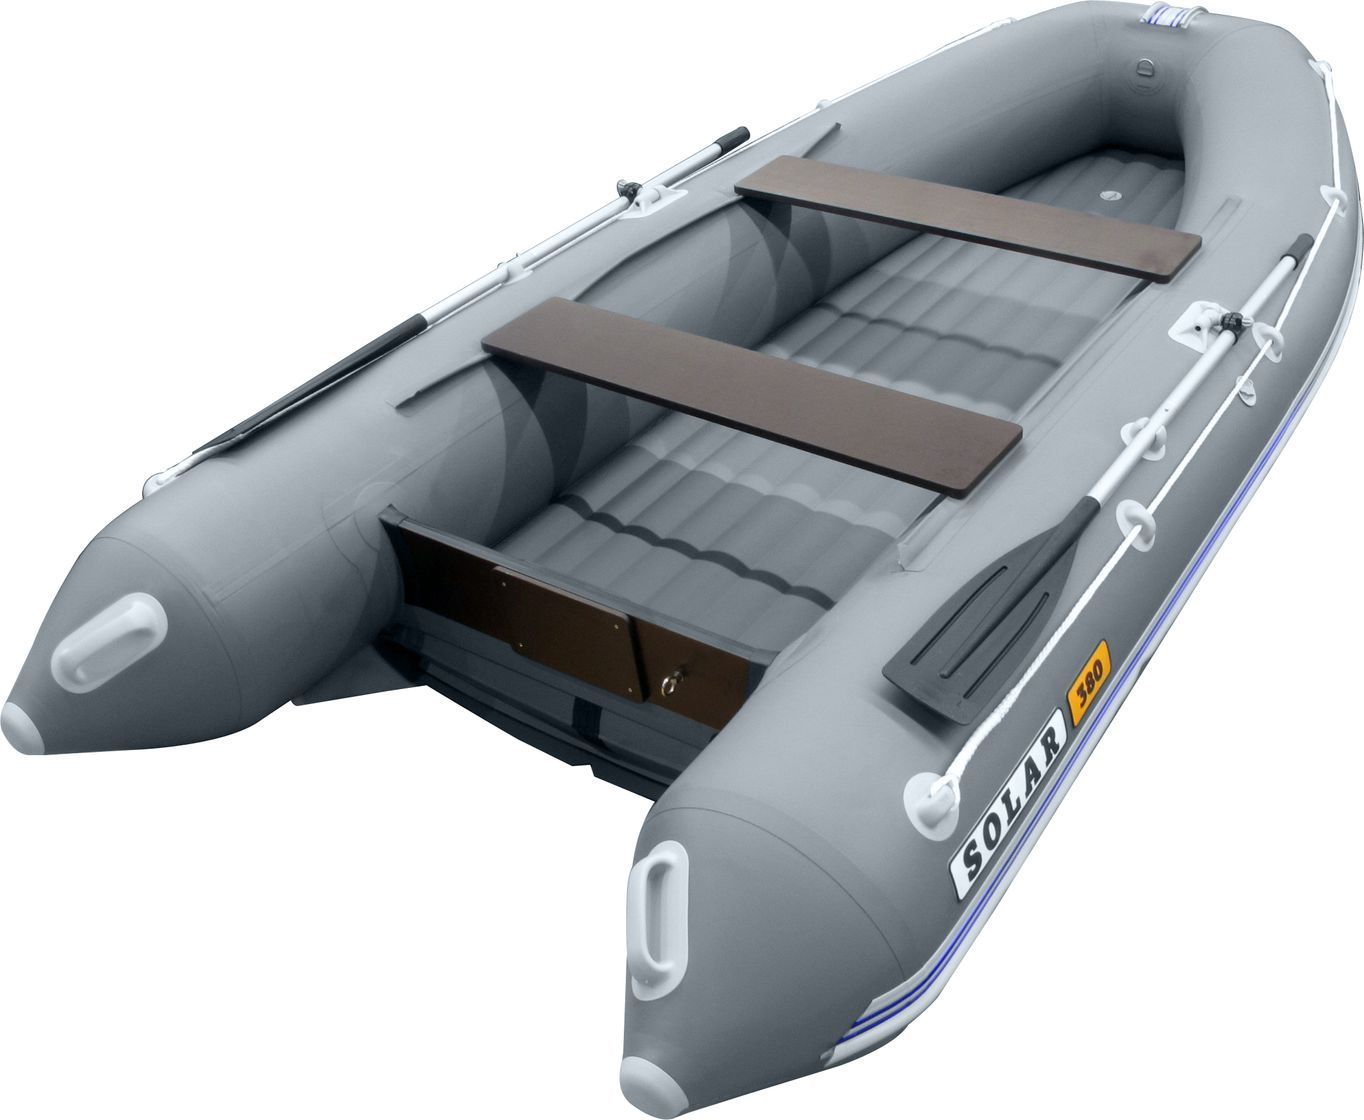 Надувная лодка ПВХ SOLAR-330 К (Оптима), серый SLR330k_opt_grey надувная лодка пвх solar 420 strannik оптима пиксель slr420stk opt pix